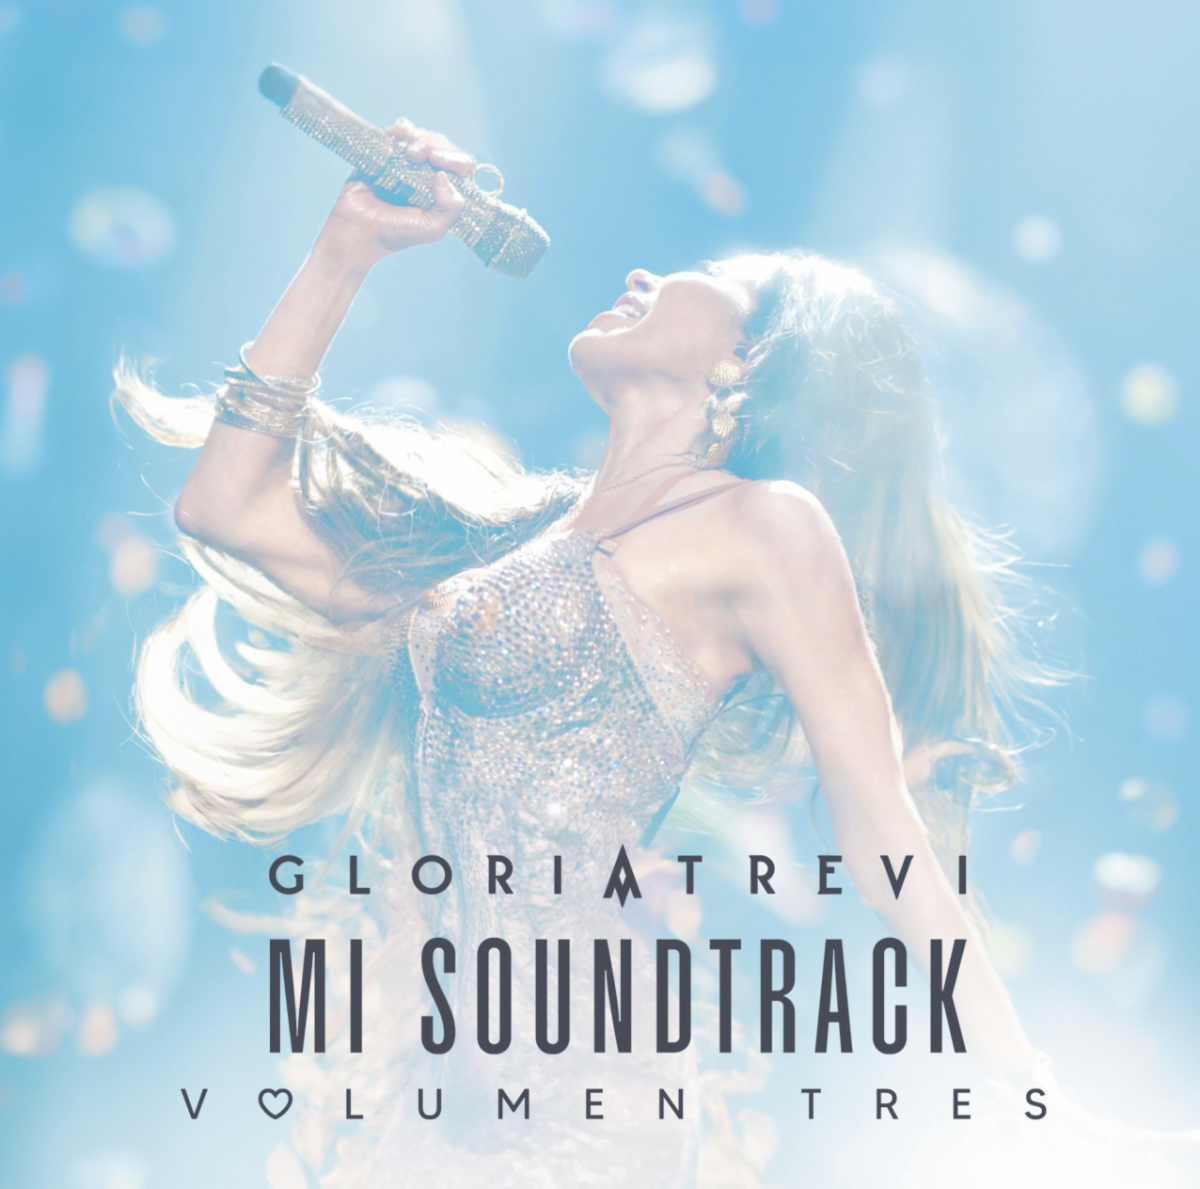 GLORIA TREVI lanza nuevo disco “Mi Soundtrack Volumen Tres”